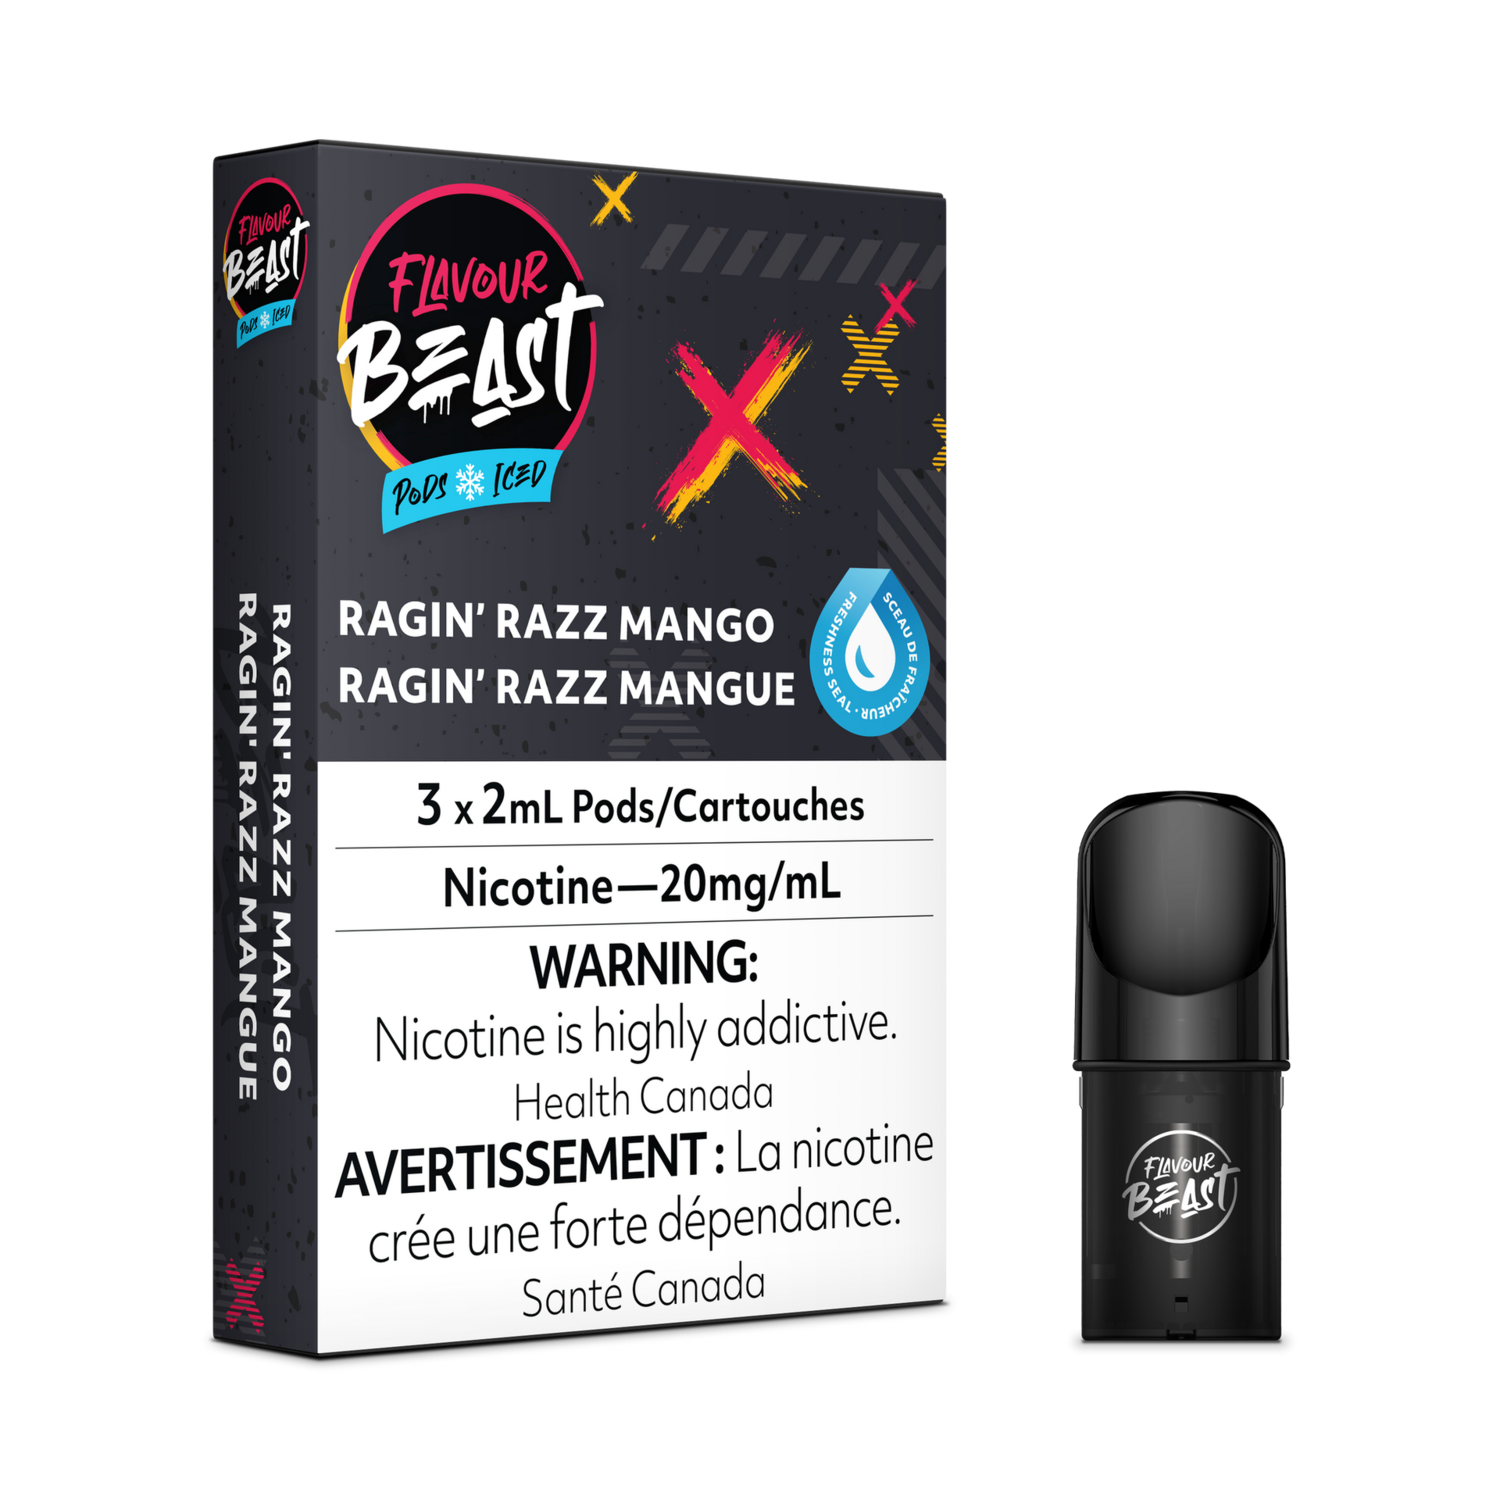 Ragin' Razz Mango Iced - Flavour Beast Pods (S-Compatible)